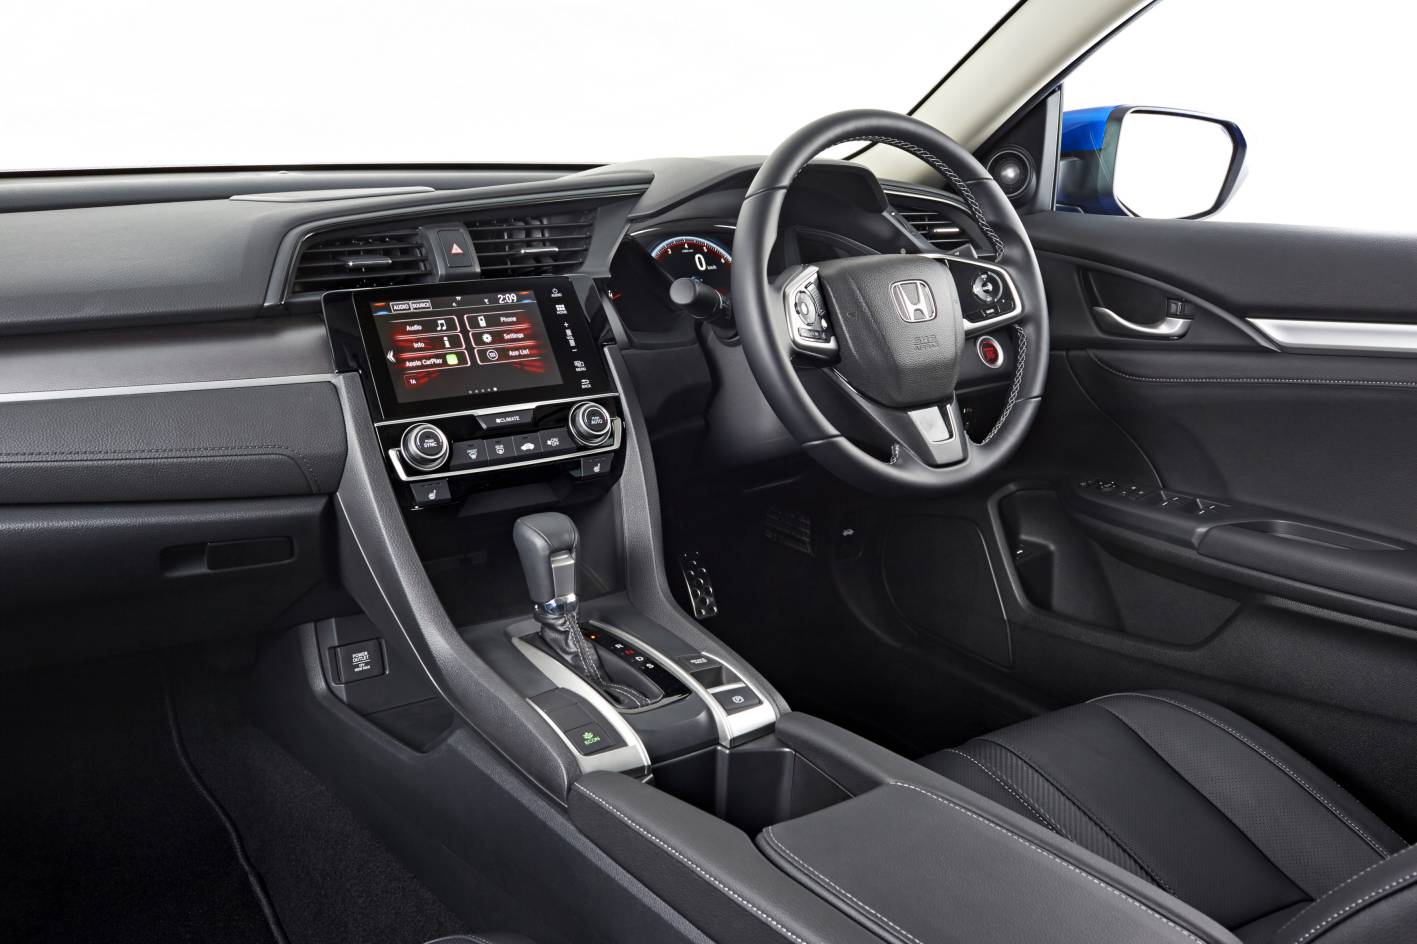 Honda Civic 1.5L Turbo Interior